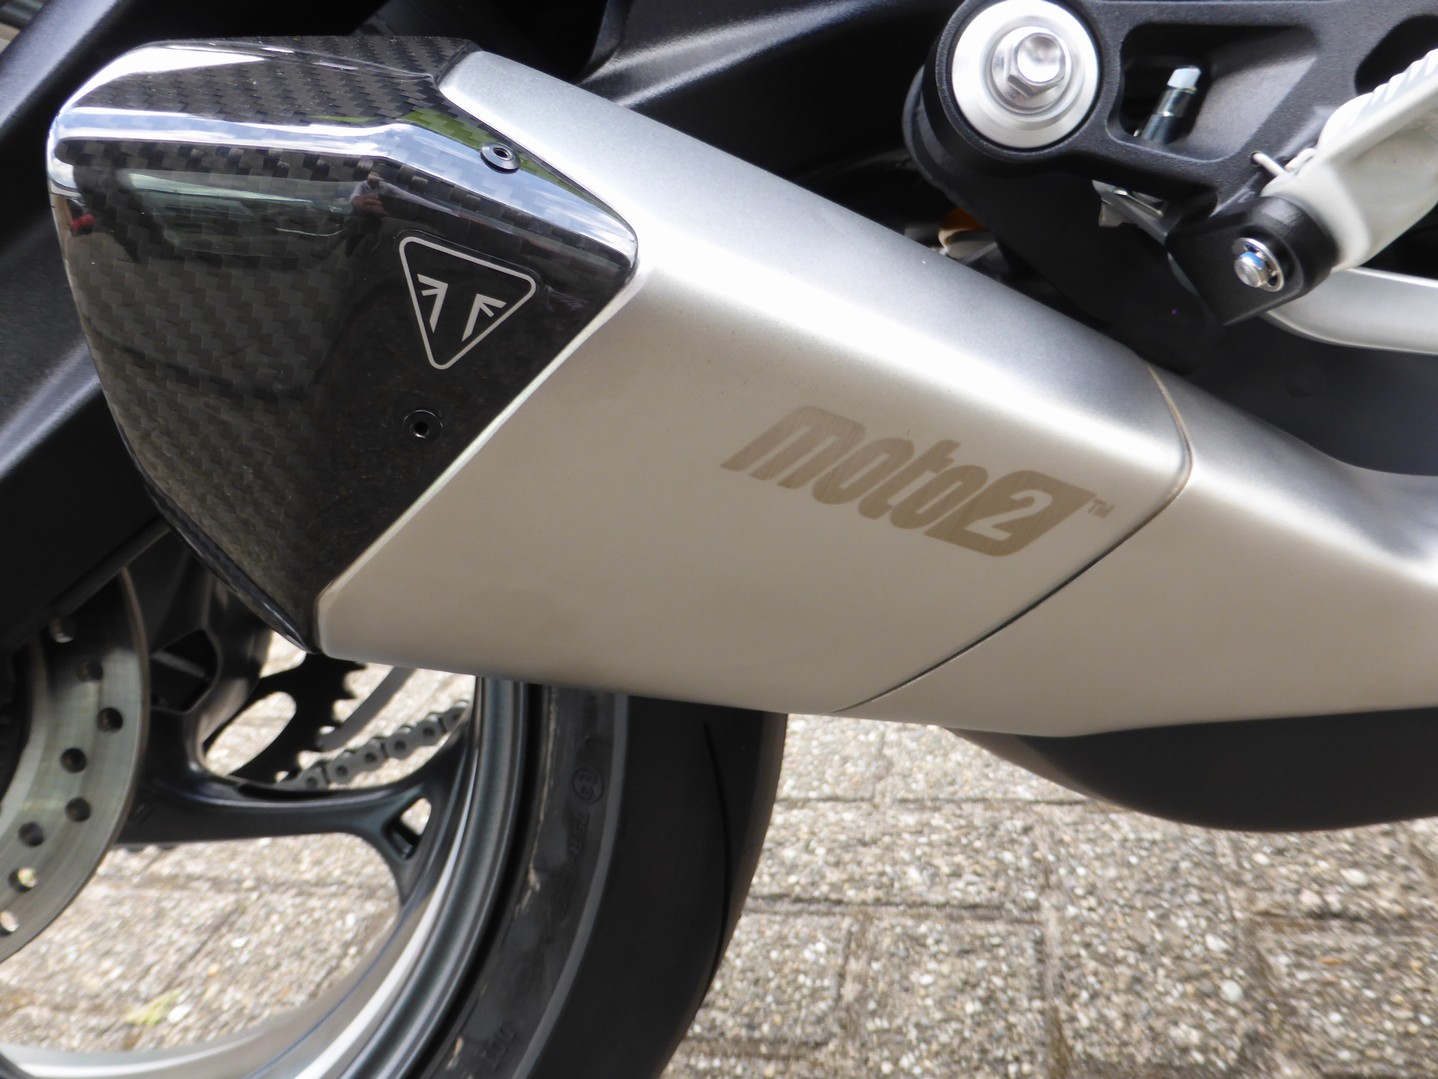 TRIUMPH - Street Triple Moto2 limited Nu